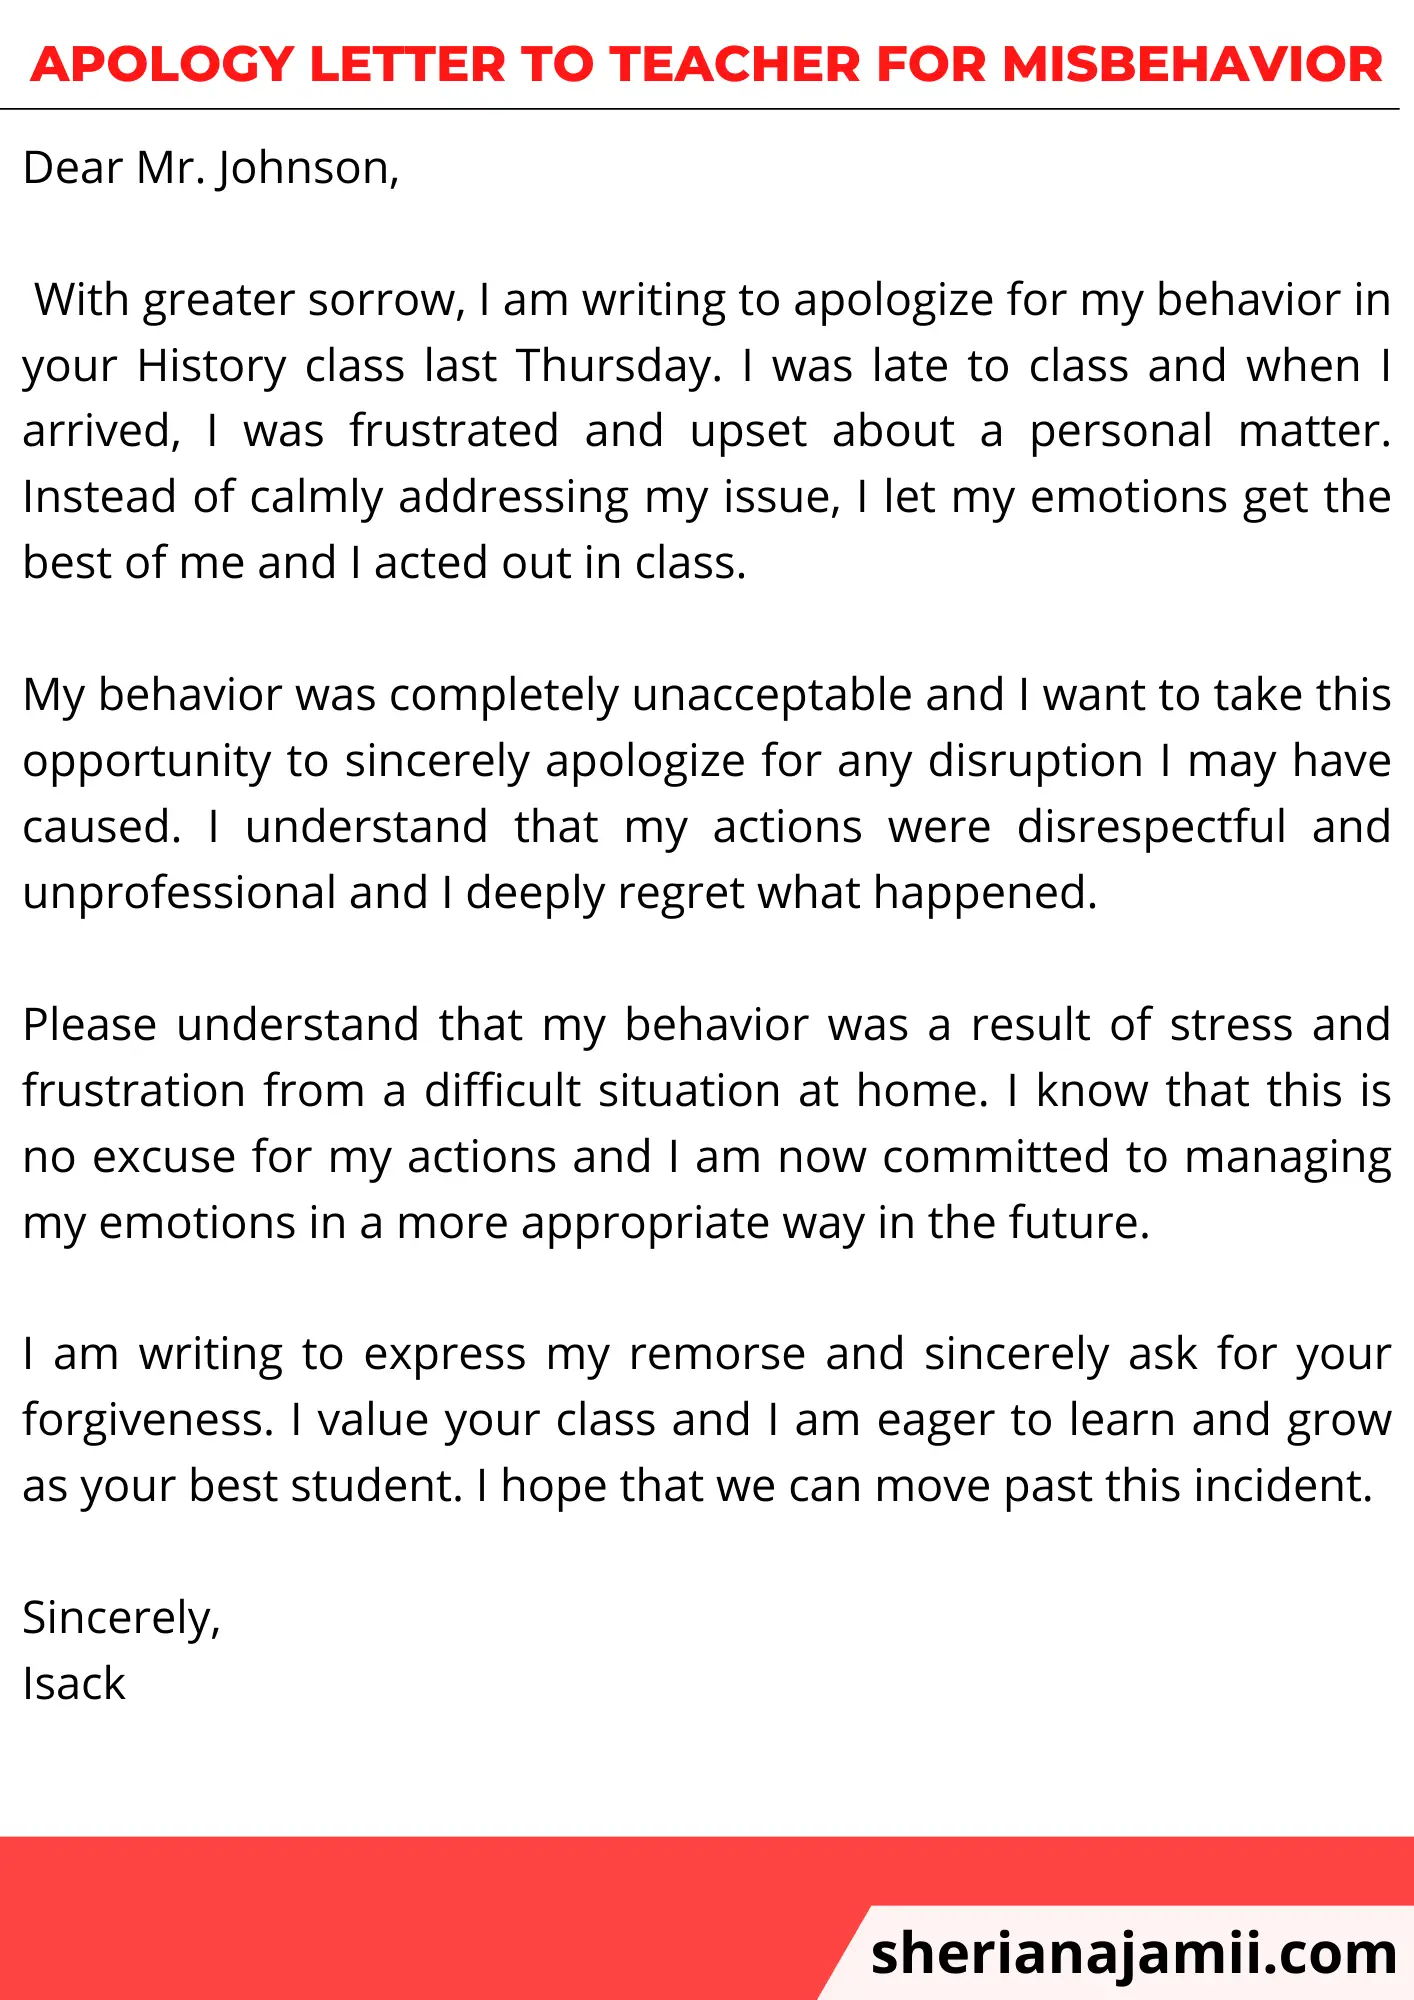 Apology letter to teacher , Apology letter to teacher for misbehavior, Apology letter to teacher for misbehavior sample